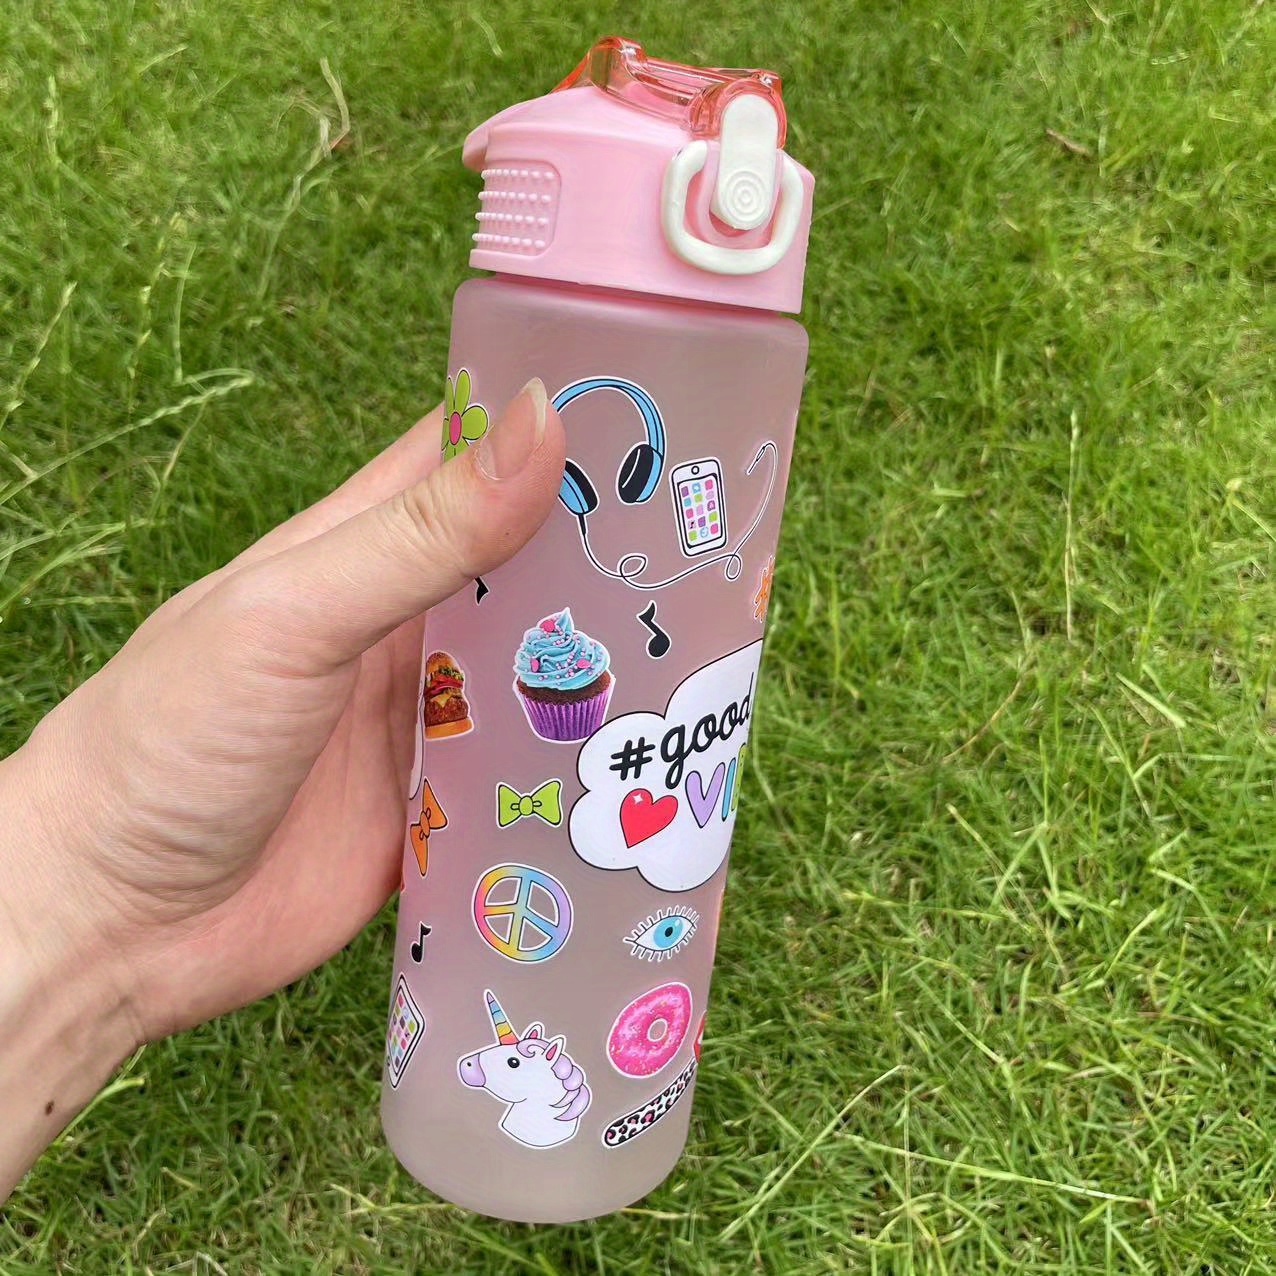 Cartoon Princess Water Bottles : disney water